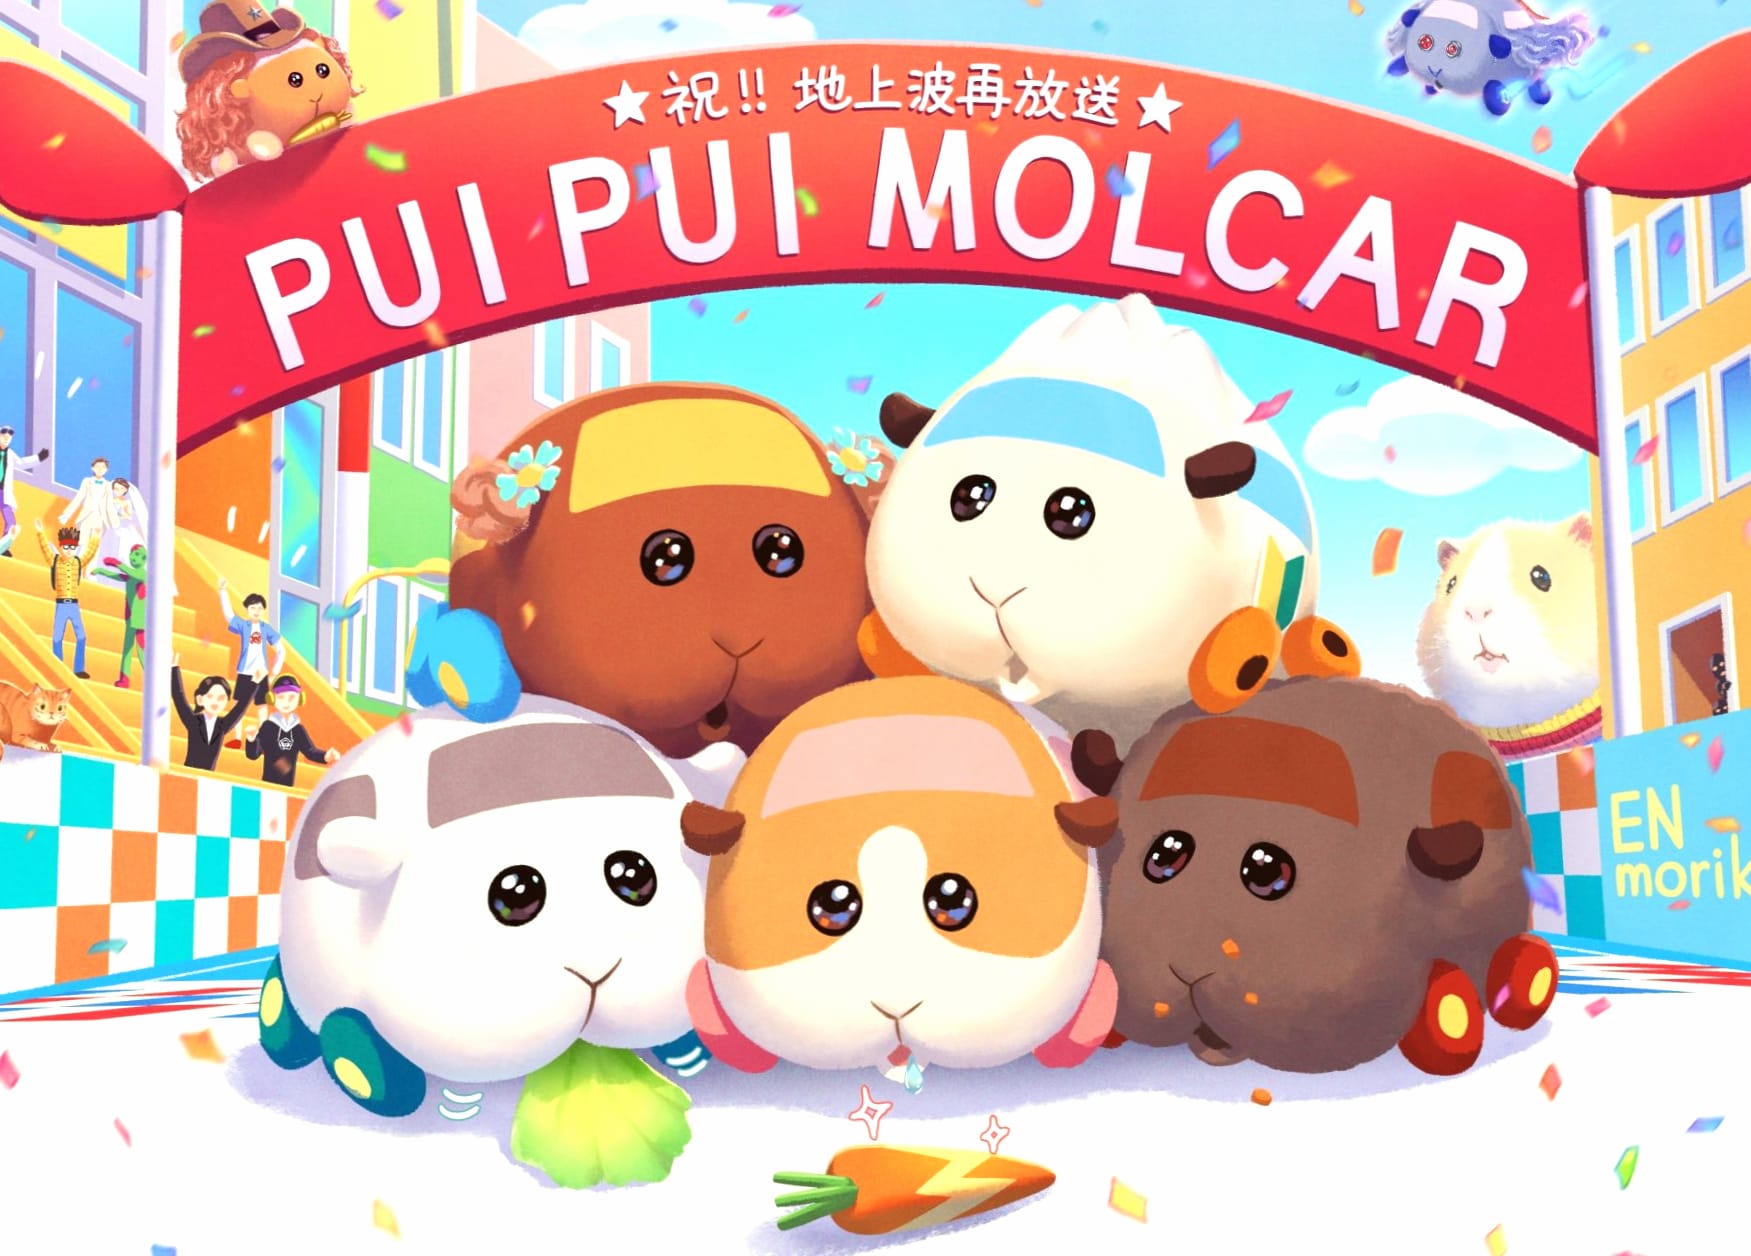 Pui Pui Molcar at 1024 x 1024 iPad size wallpapers HD quality